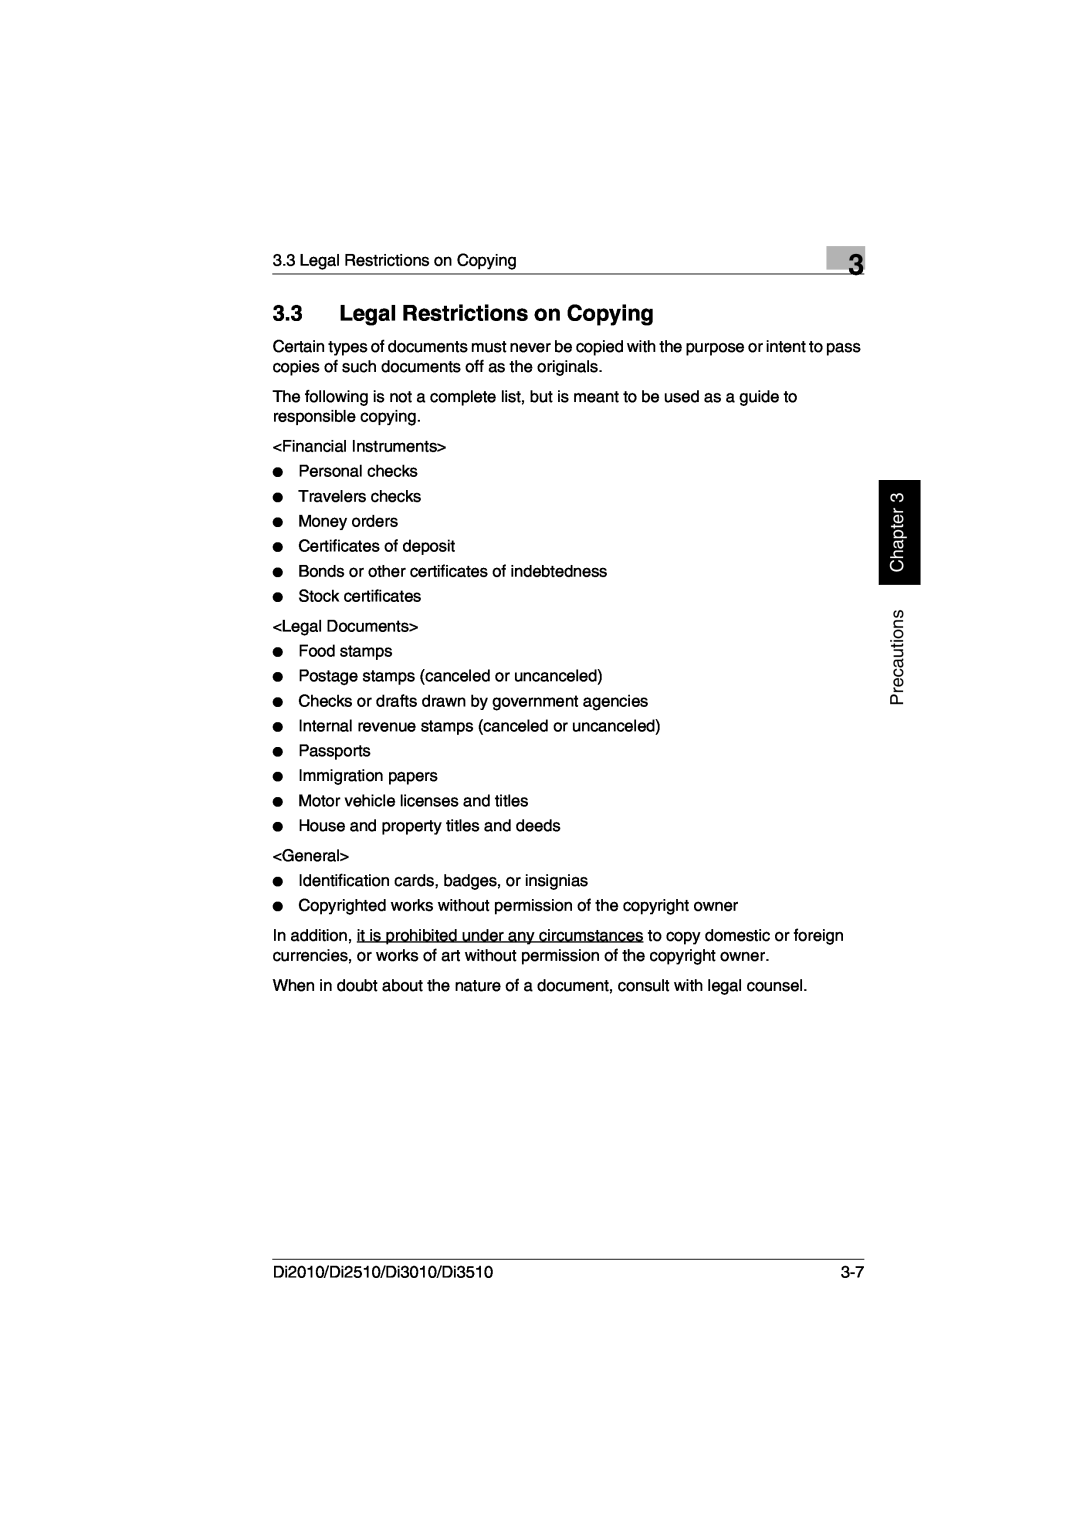 Minolta DI2510, DI2010, DI3010, Di3510 user manual Legal Restrictions on Copying, Precautions Chapter 